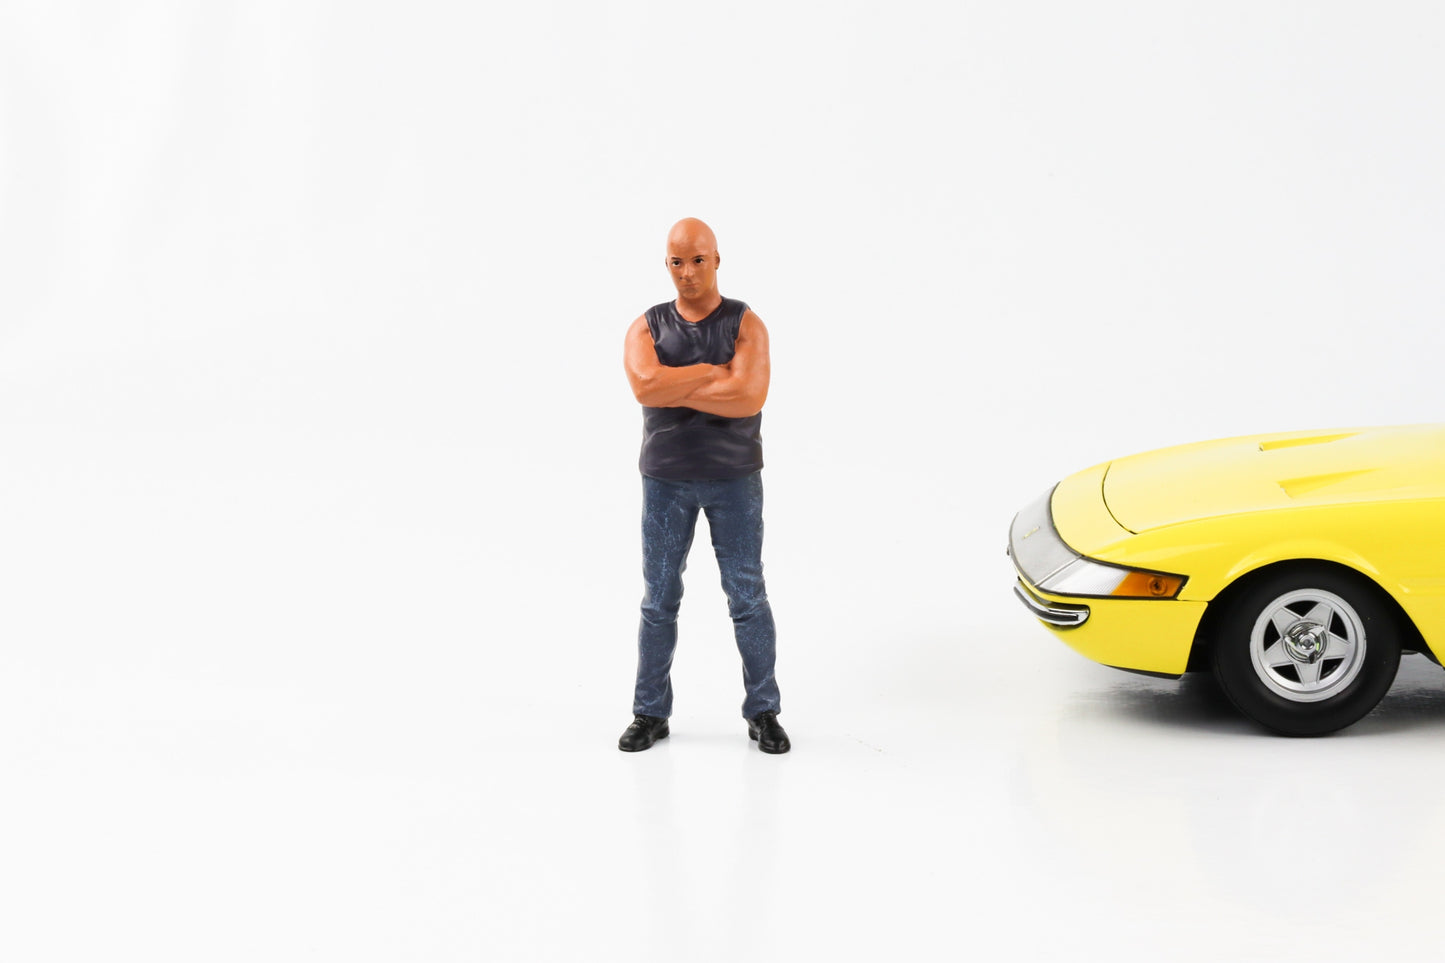 1:18 Figure Car Meet 3 bald muscle Man and Tanktop American Diorama Figures